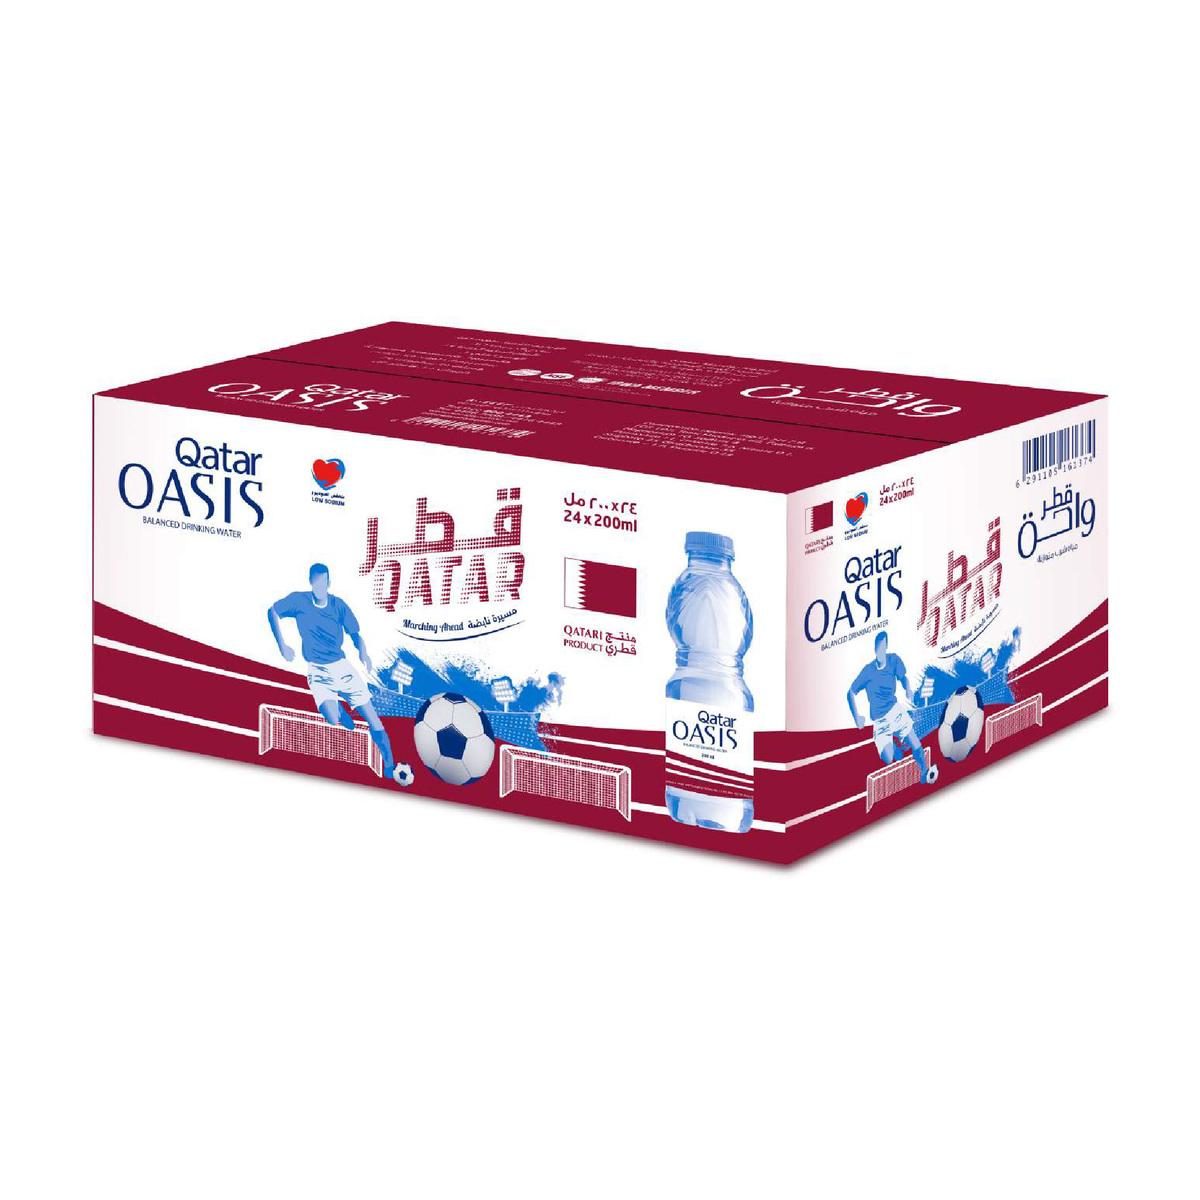 Qatar Oasis Balanced Drinking Water 40 x 200ml